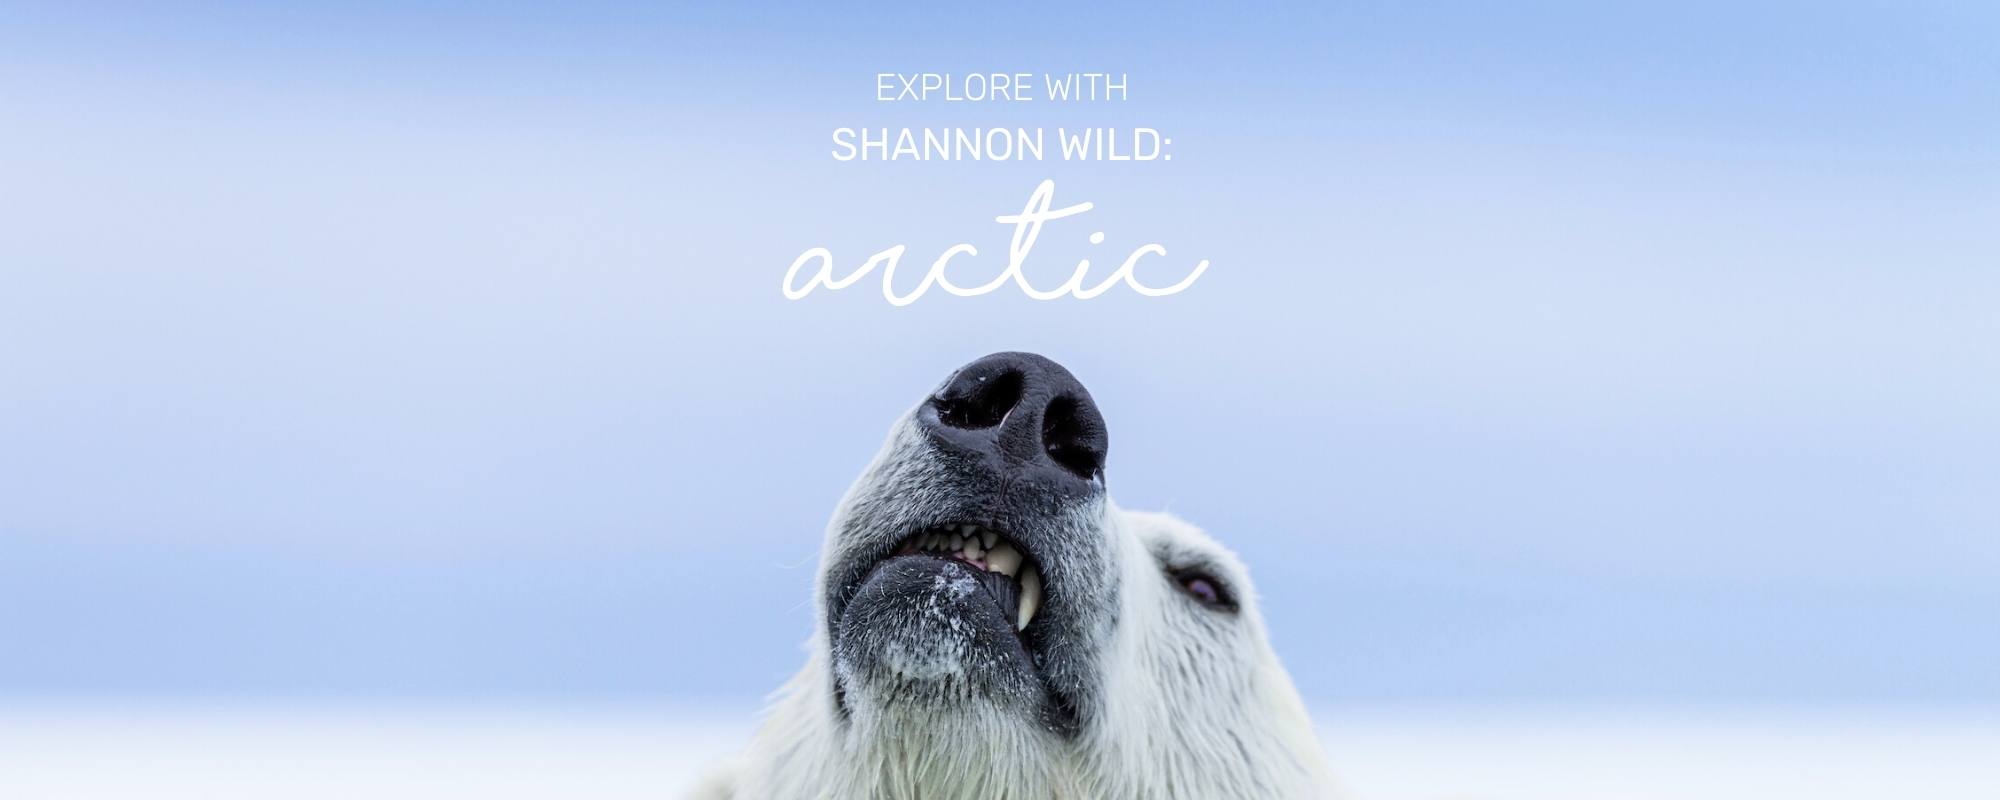 EXPLORE WITH SHANNON WILD: ARCTIC